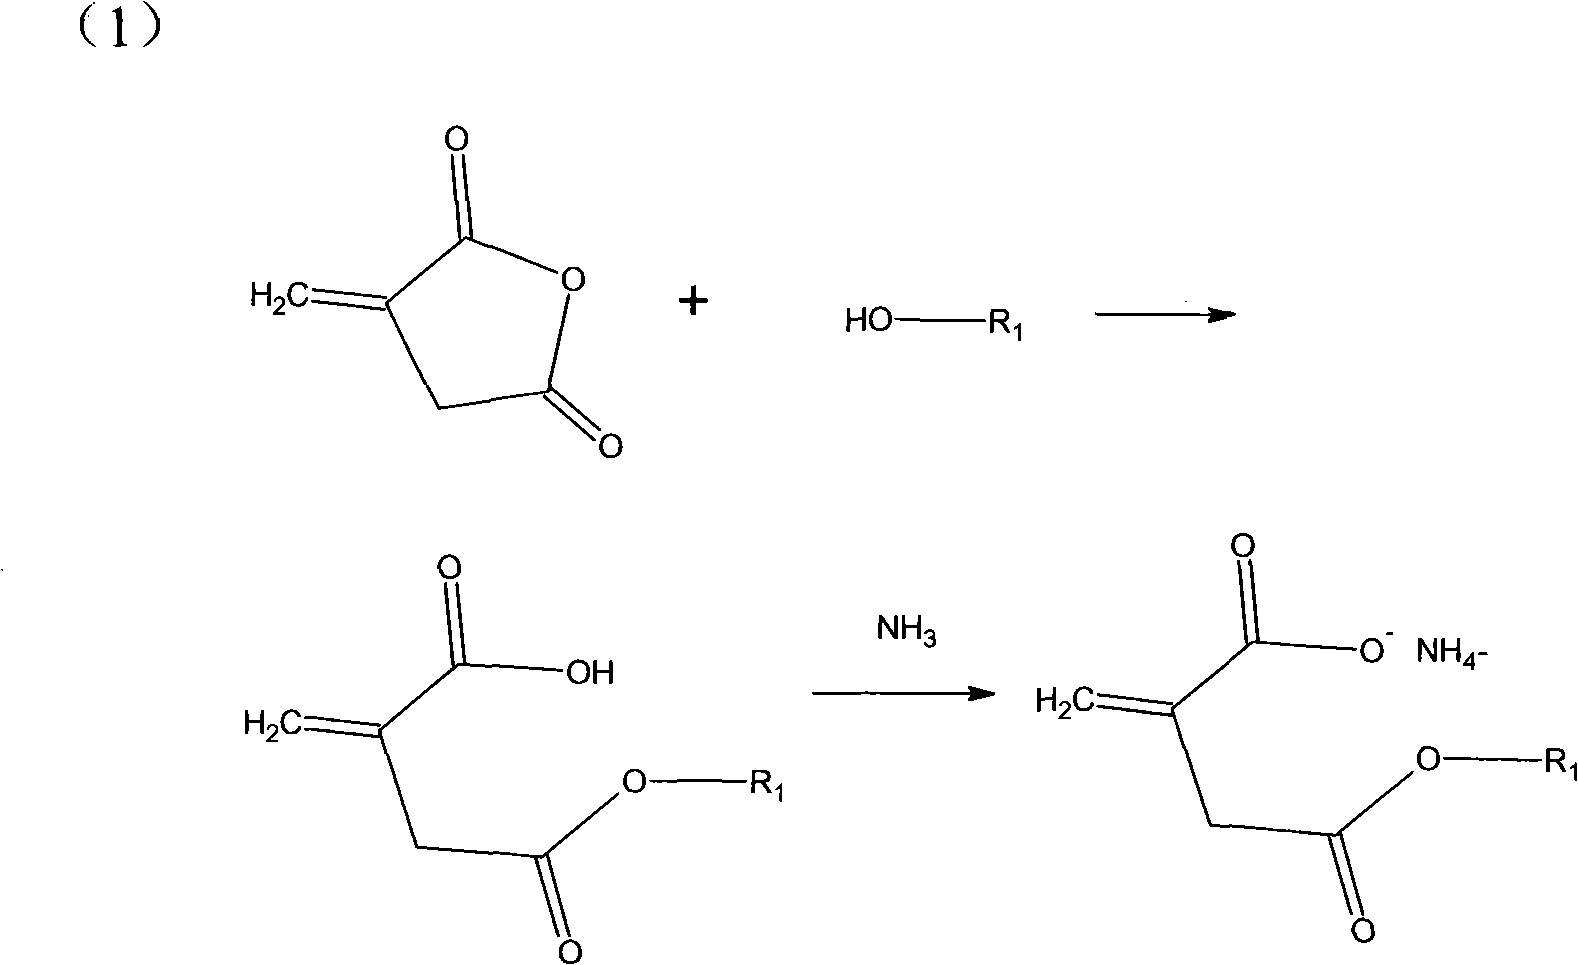 Itaconic acid derivant for copolymerization of acrylonitrile